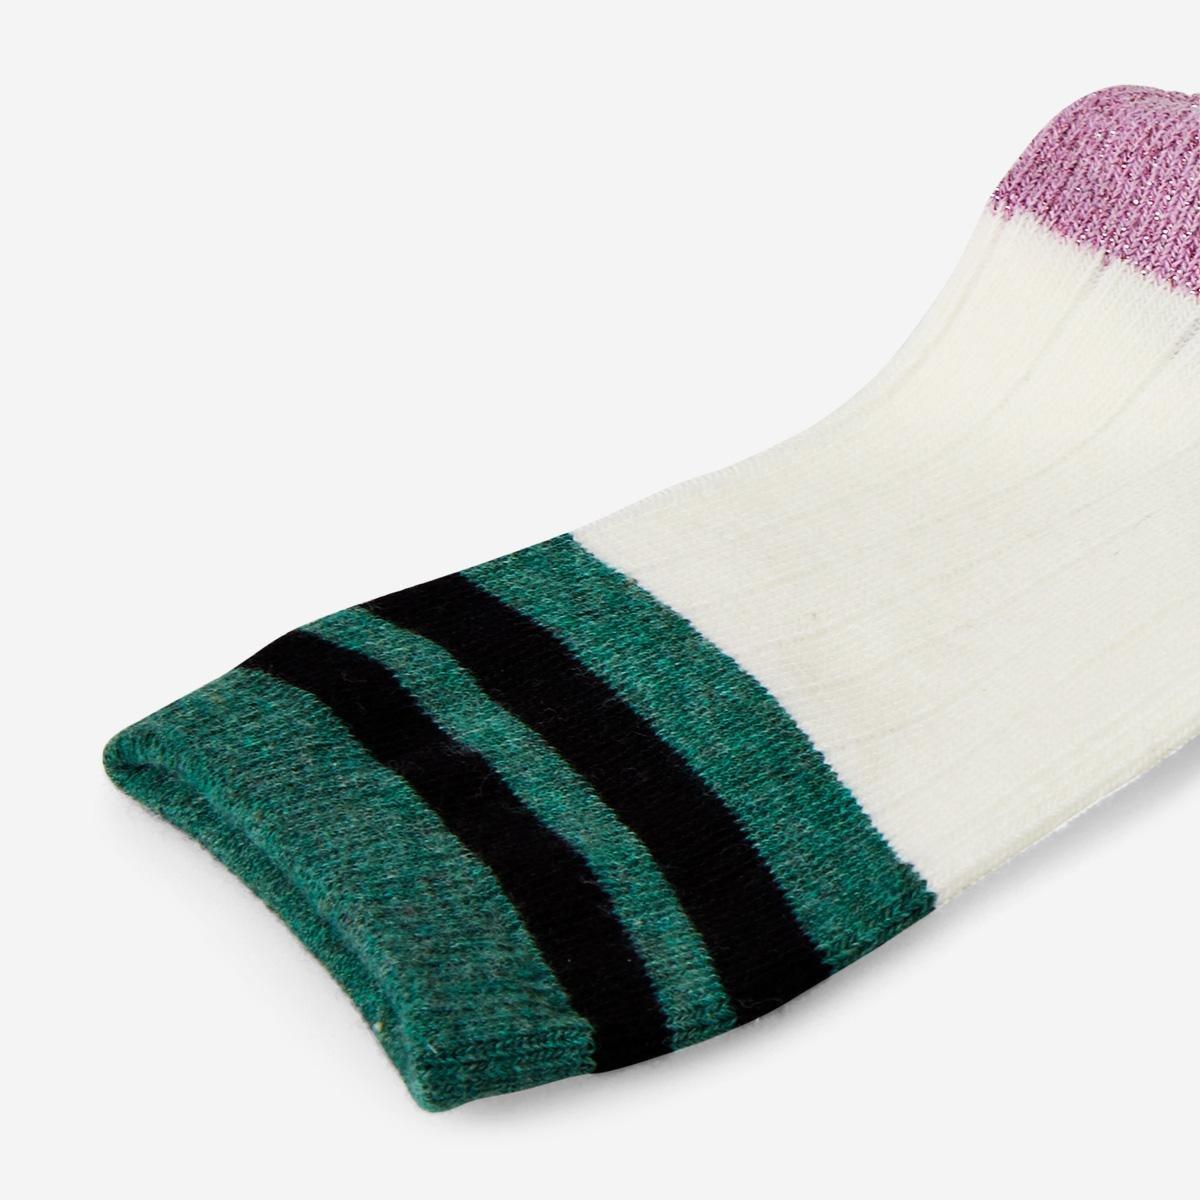 Green top white socks. size 39-41